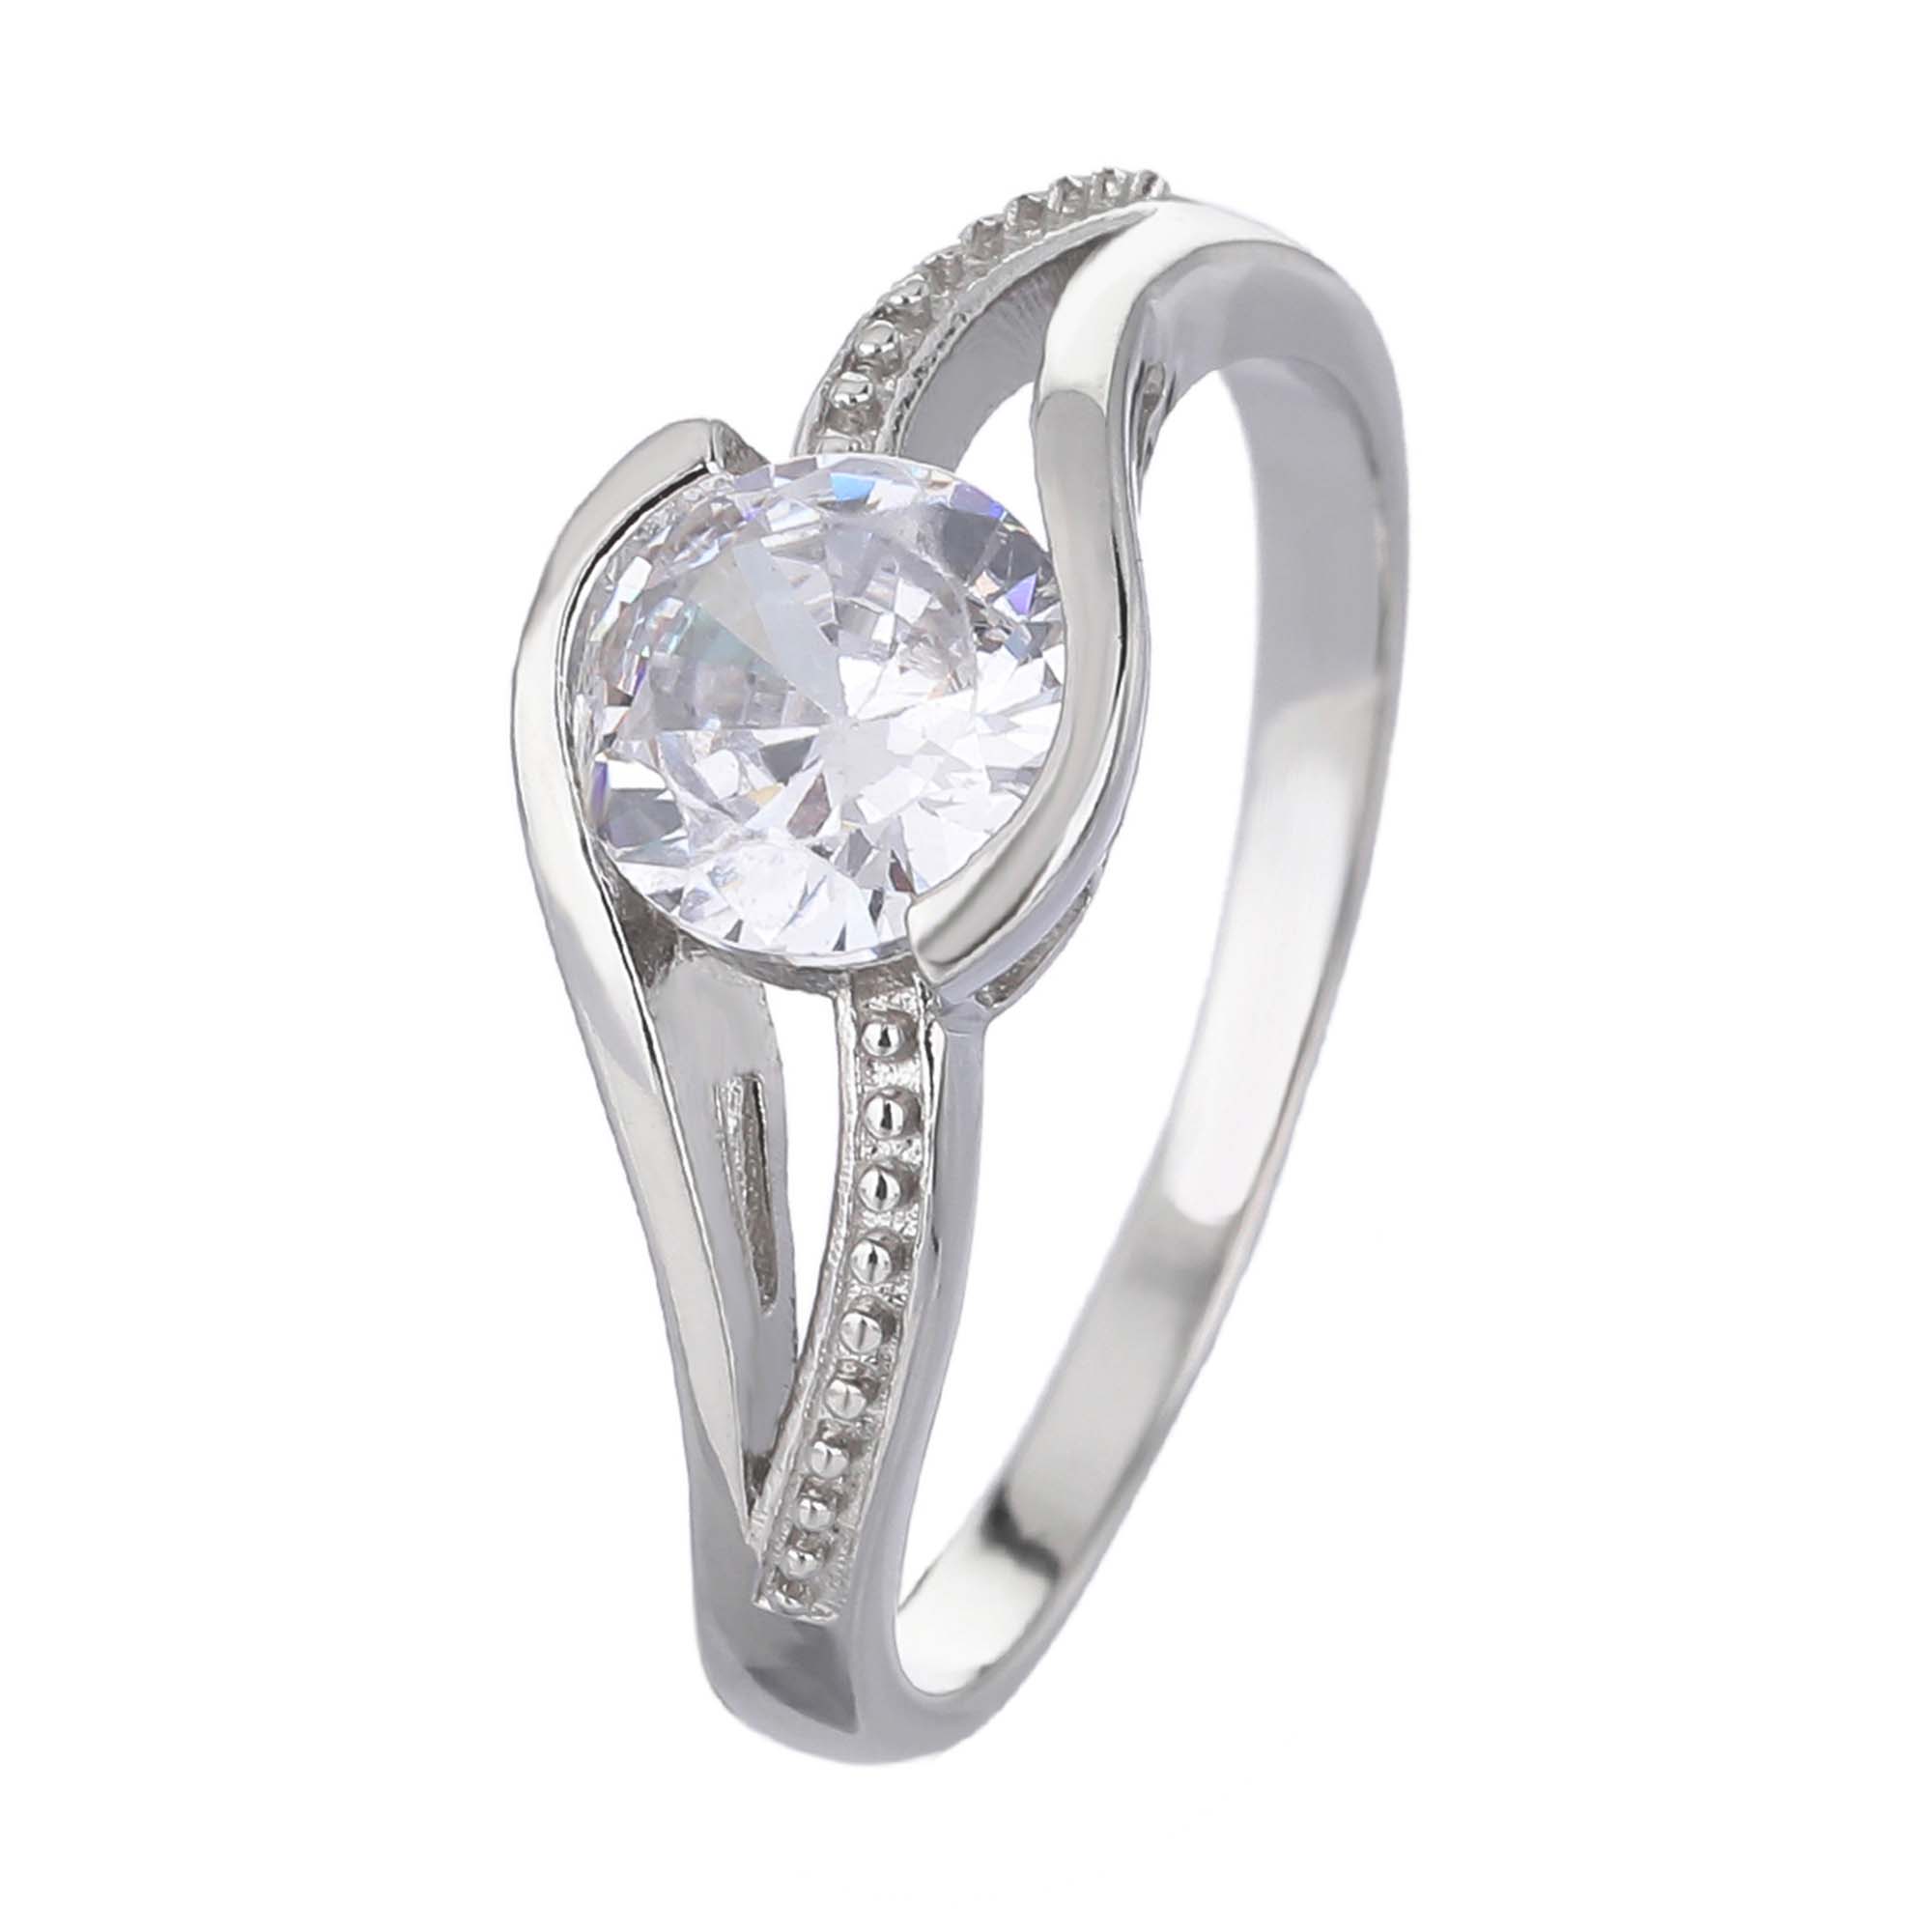 Stříbrný prsten SOLITÉR bílý VLNKY Velikost prstenu: 50 Ag 925/1000